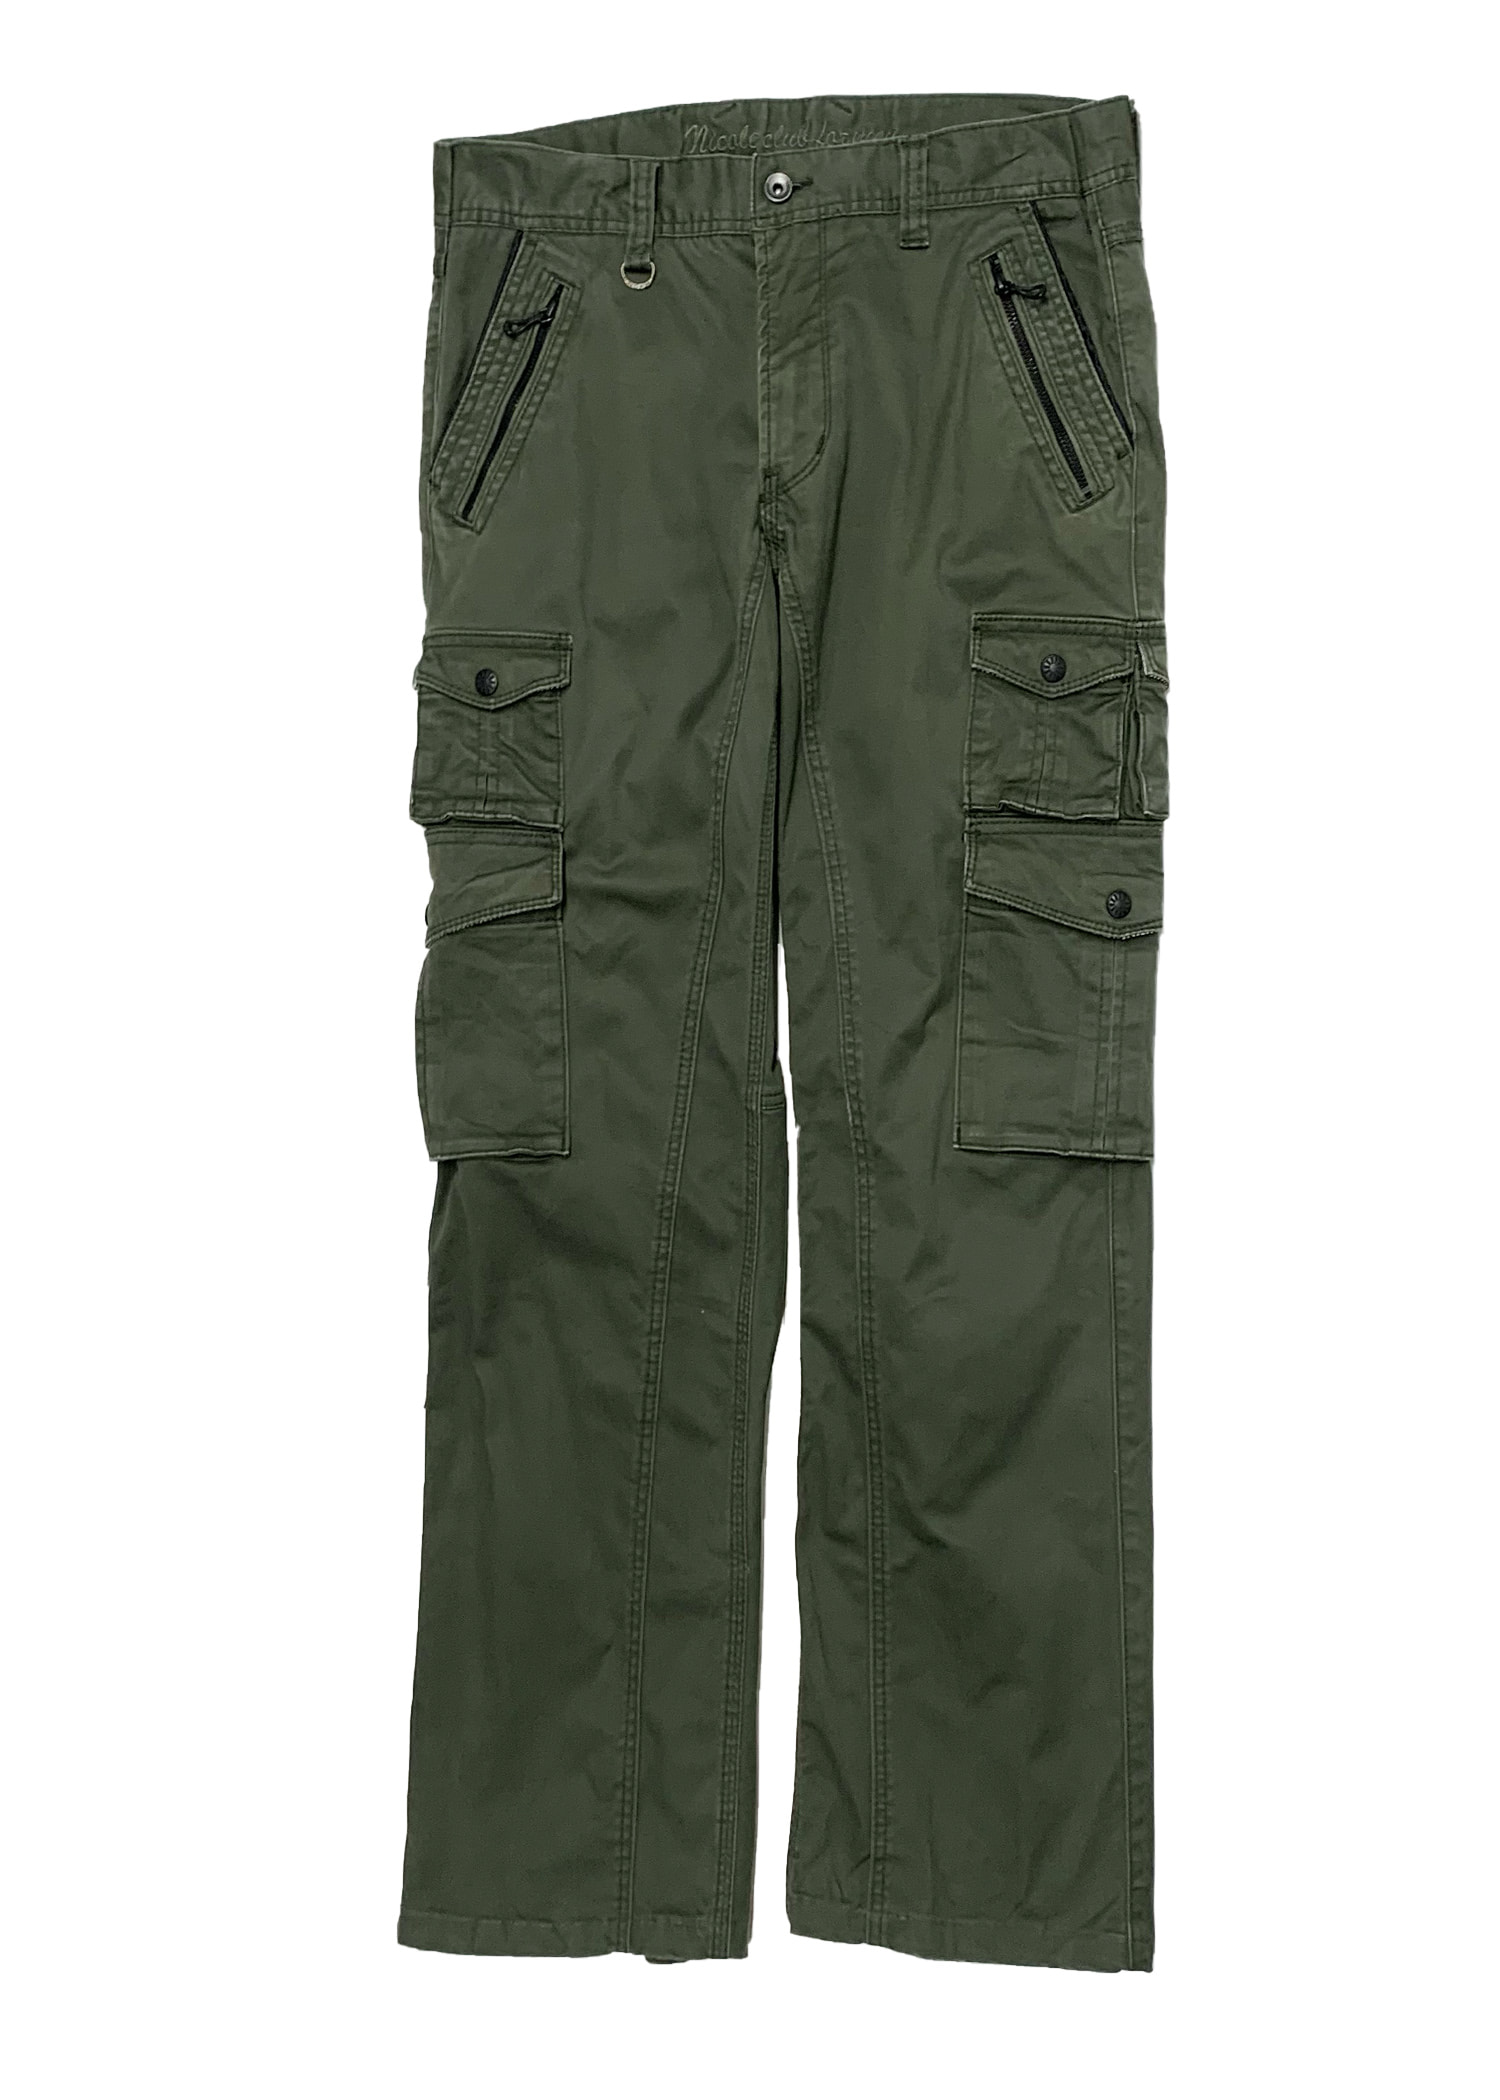 NICOLE CLUB FOR MEN 9-pocket pants